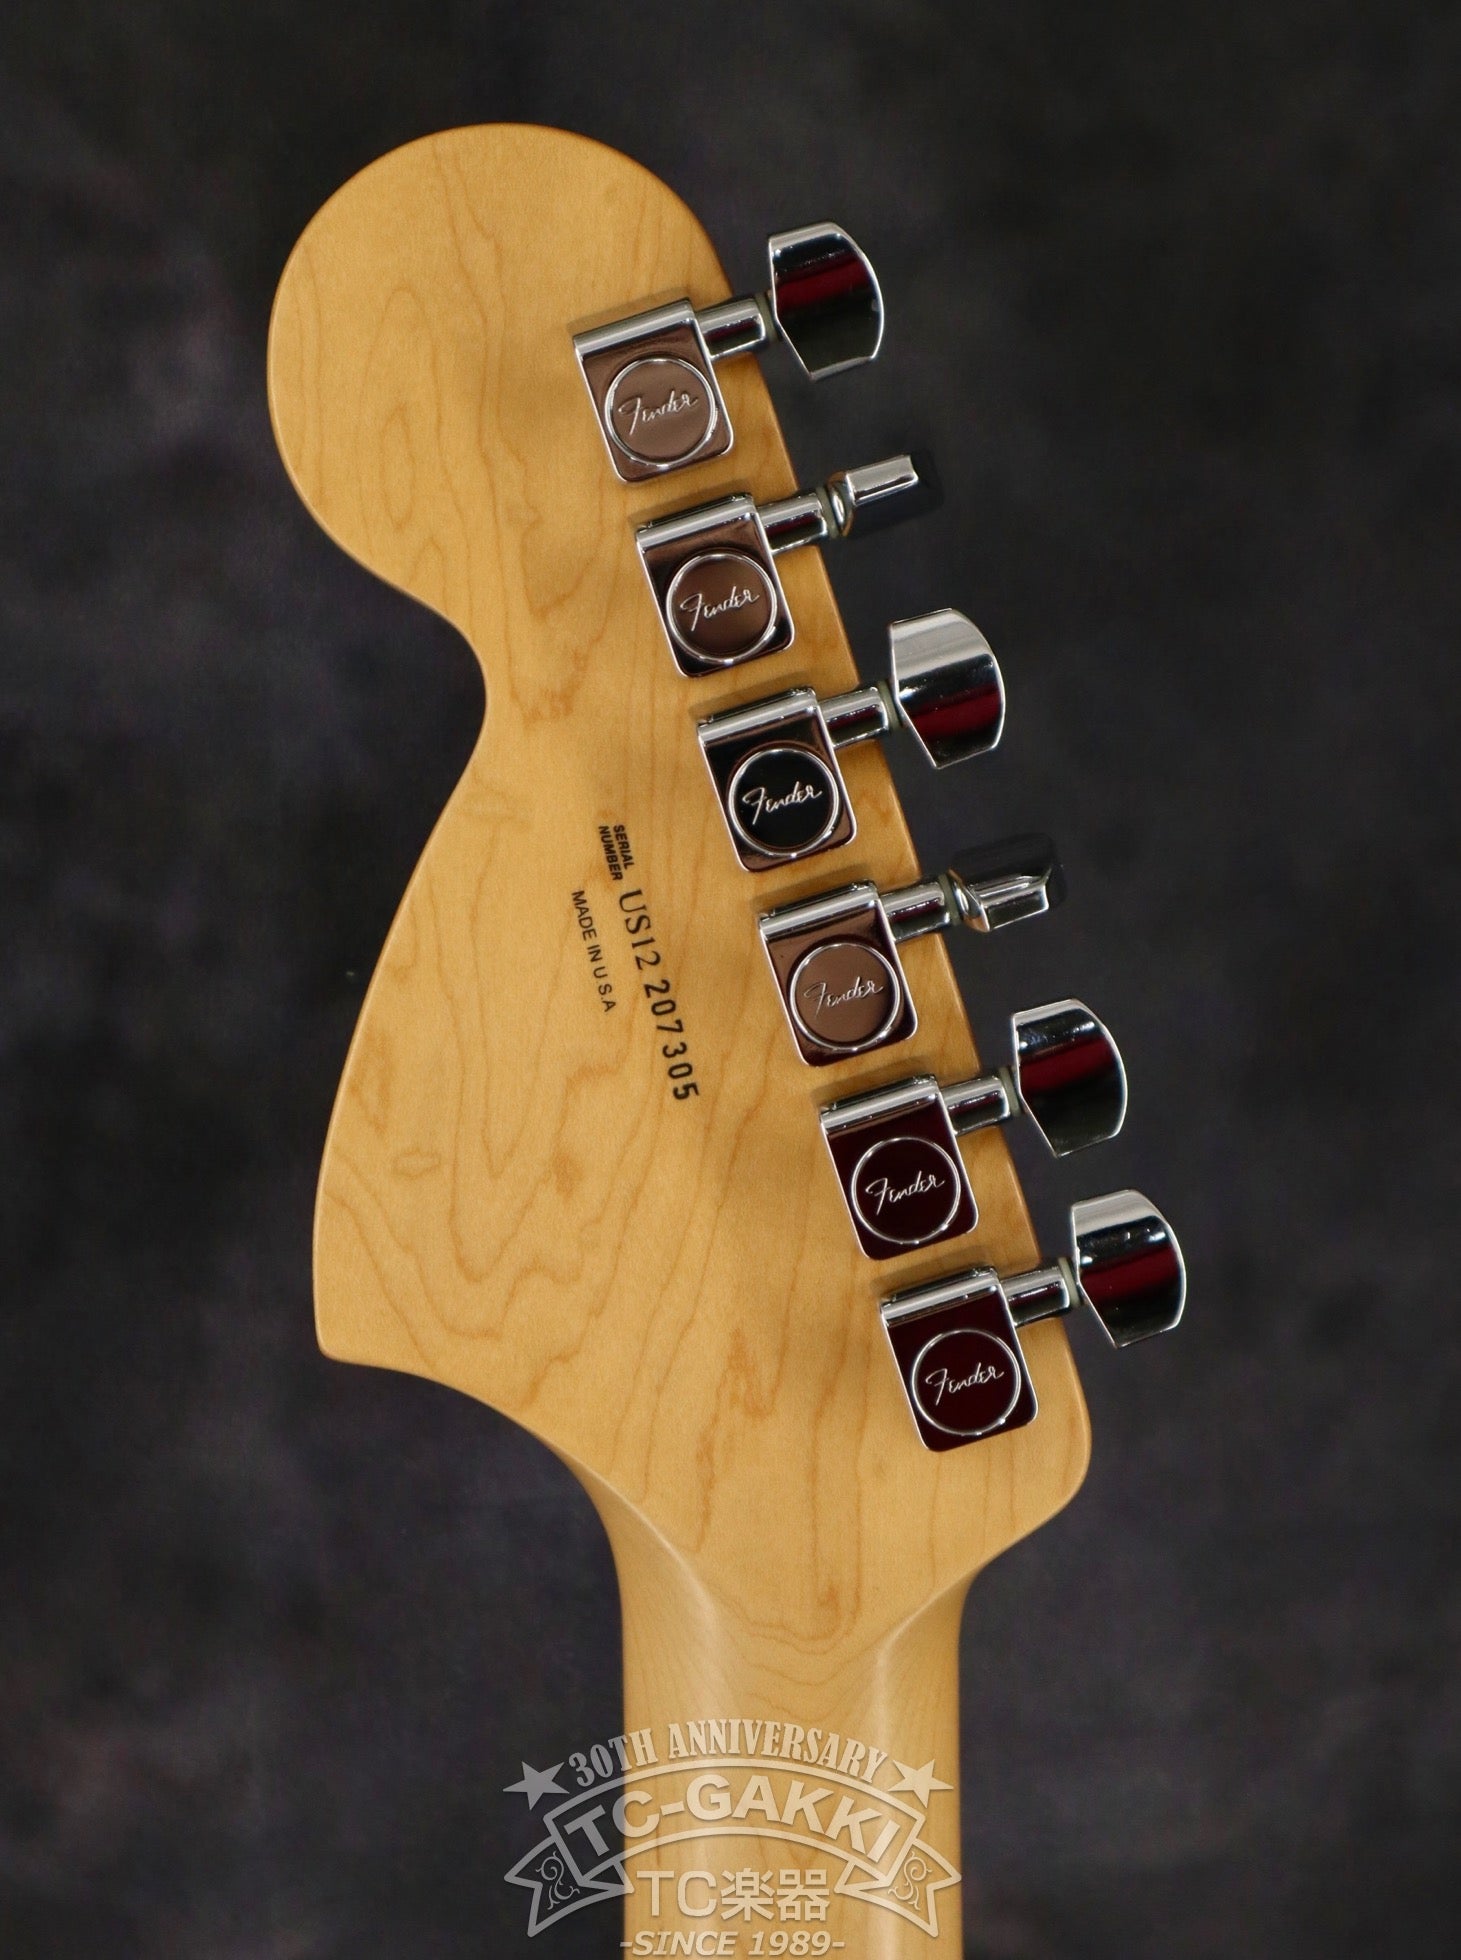 2012 American Special Stratocaster HSS mod. - TC楽器 - TCGAKKI